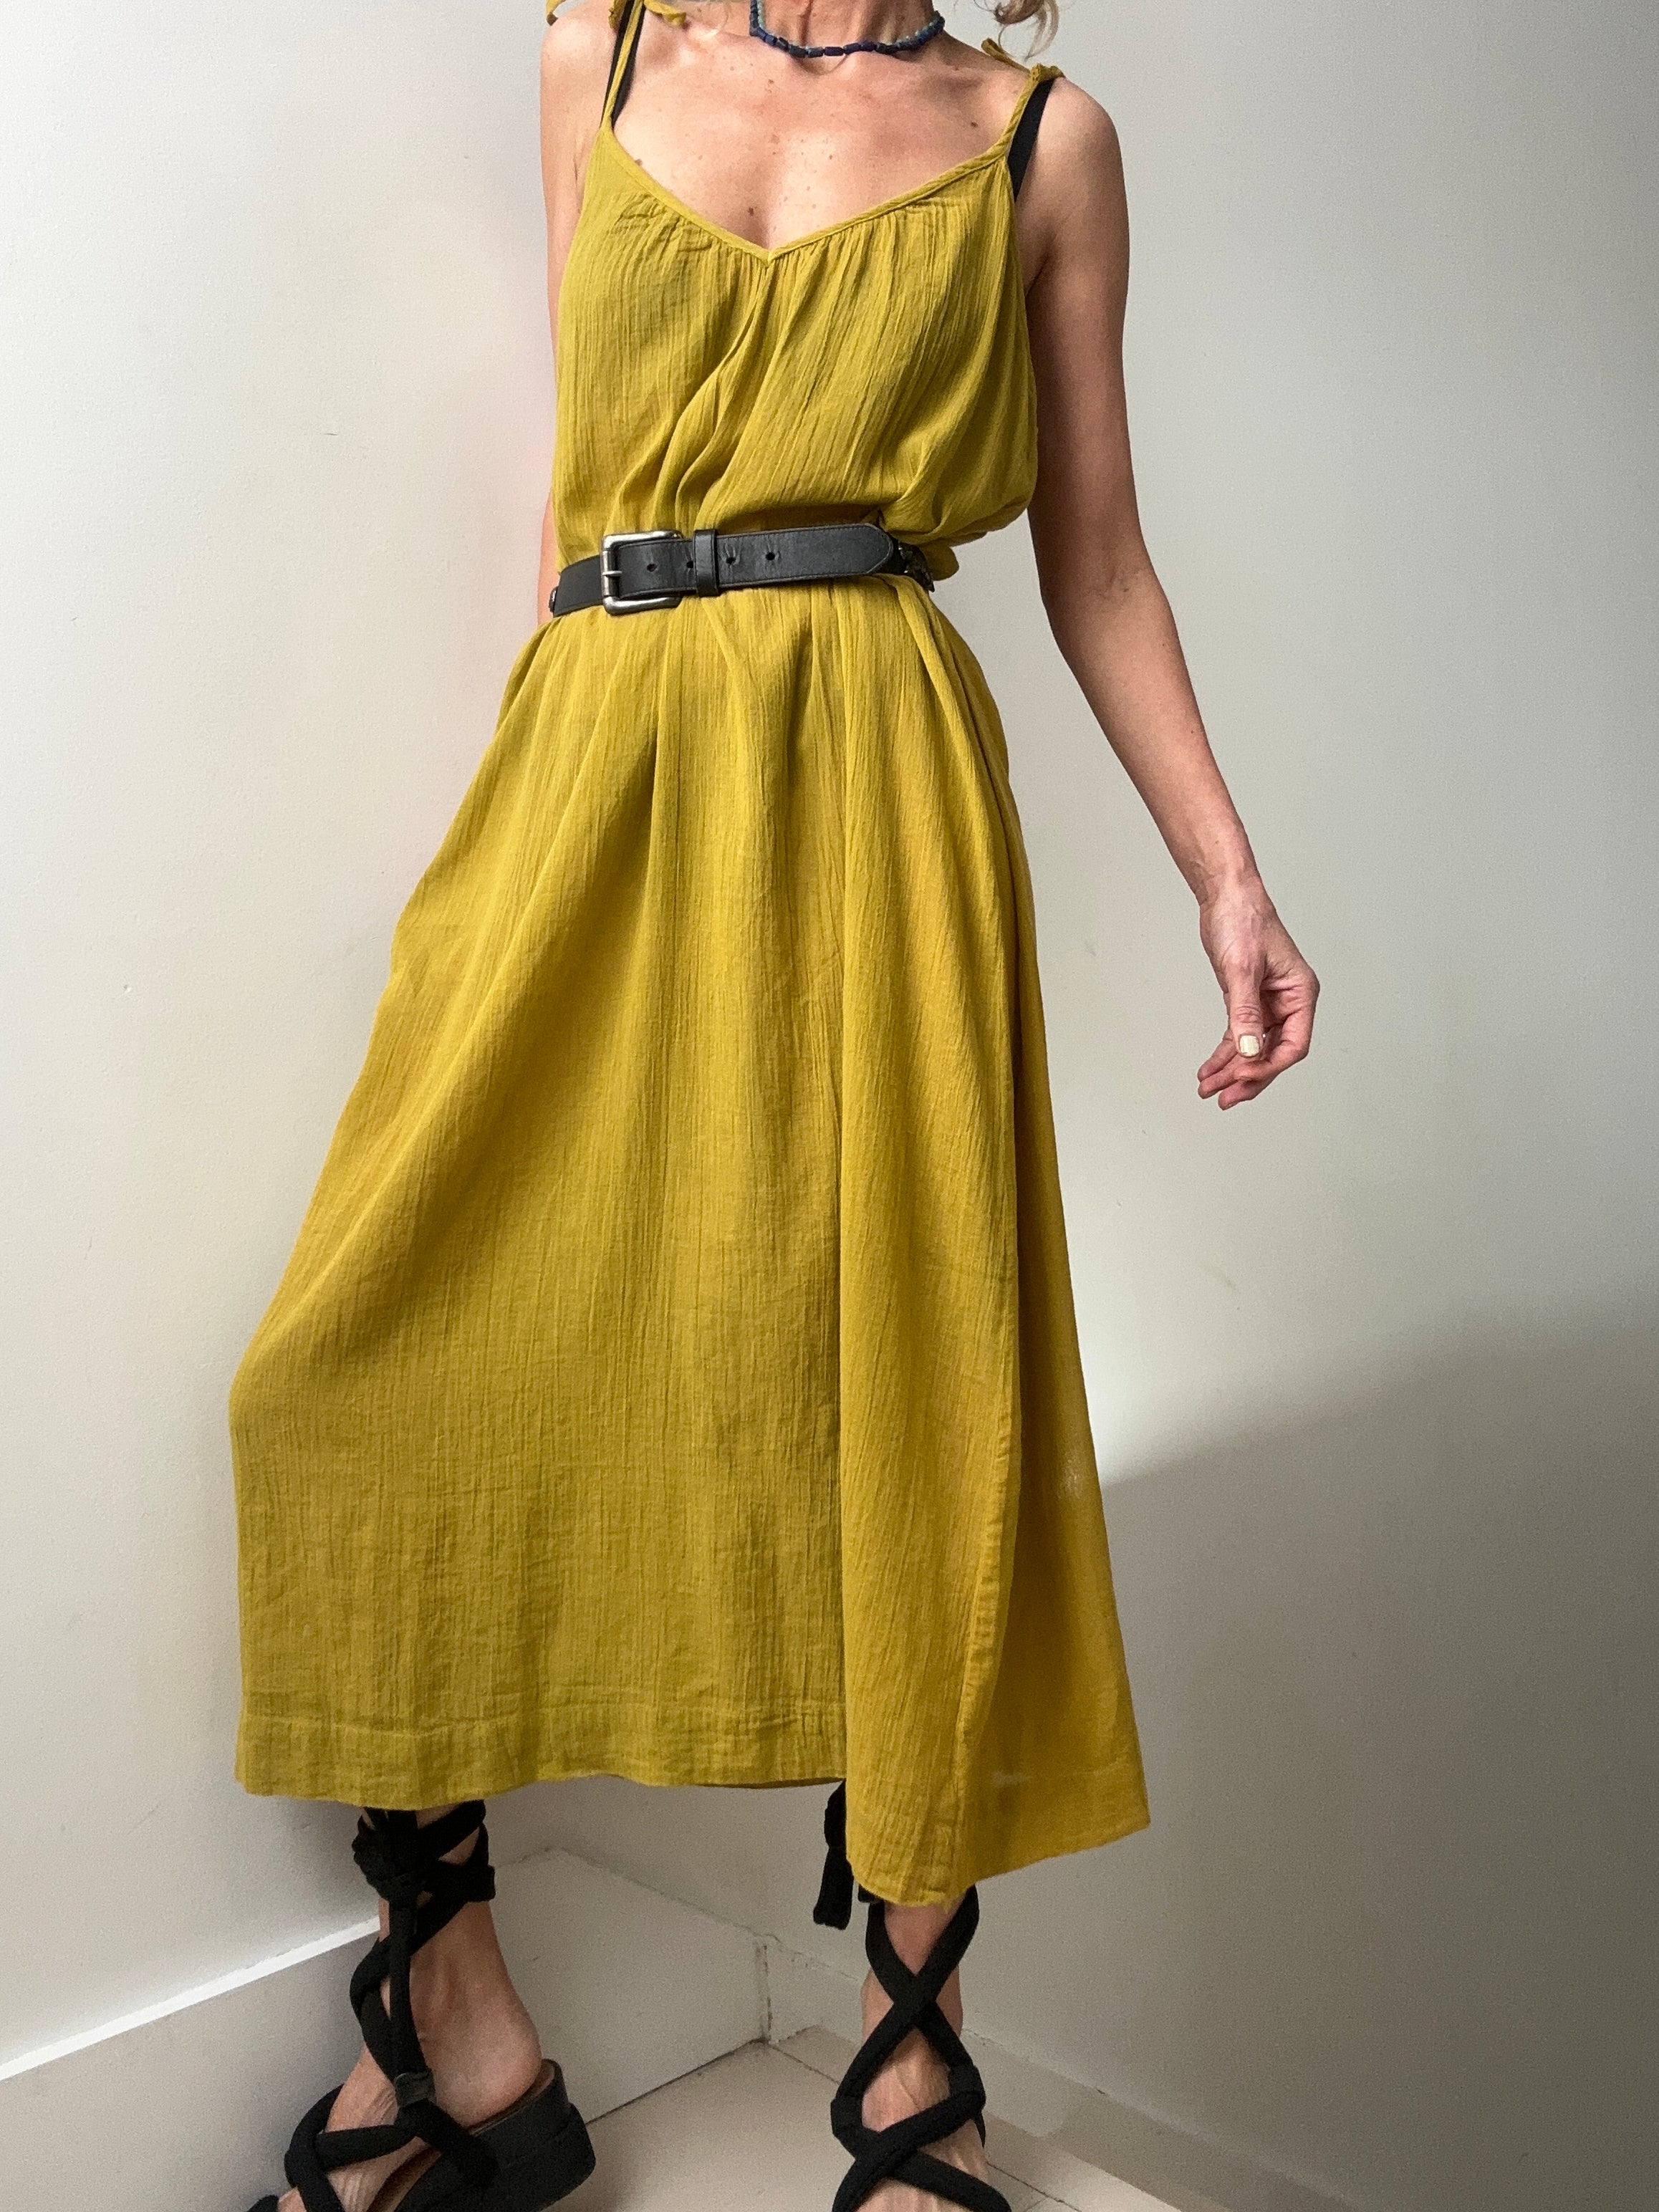 Jetsetbohemian Dresses One Size Tie Strap Cotton Dress in Mustard